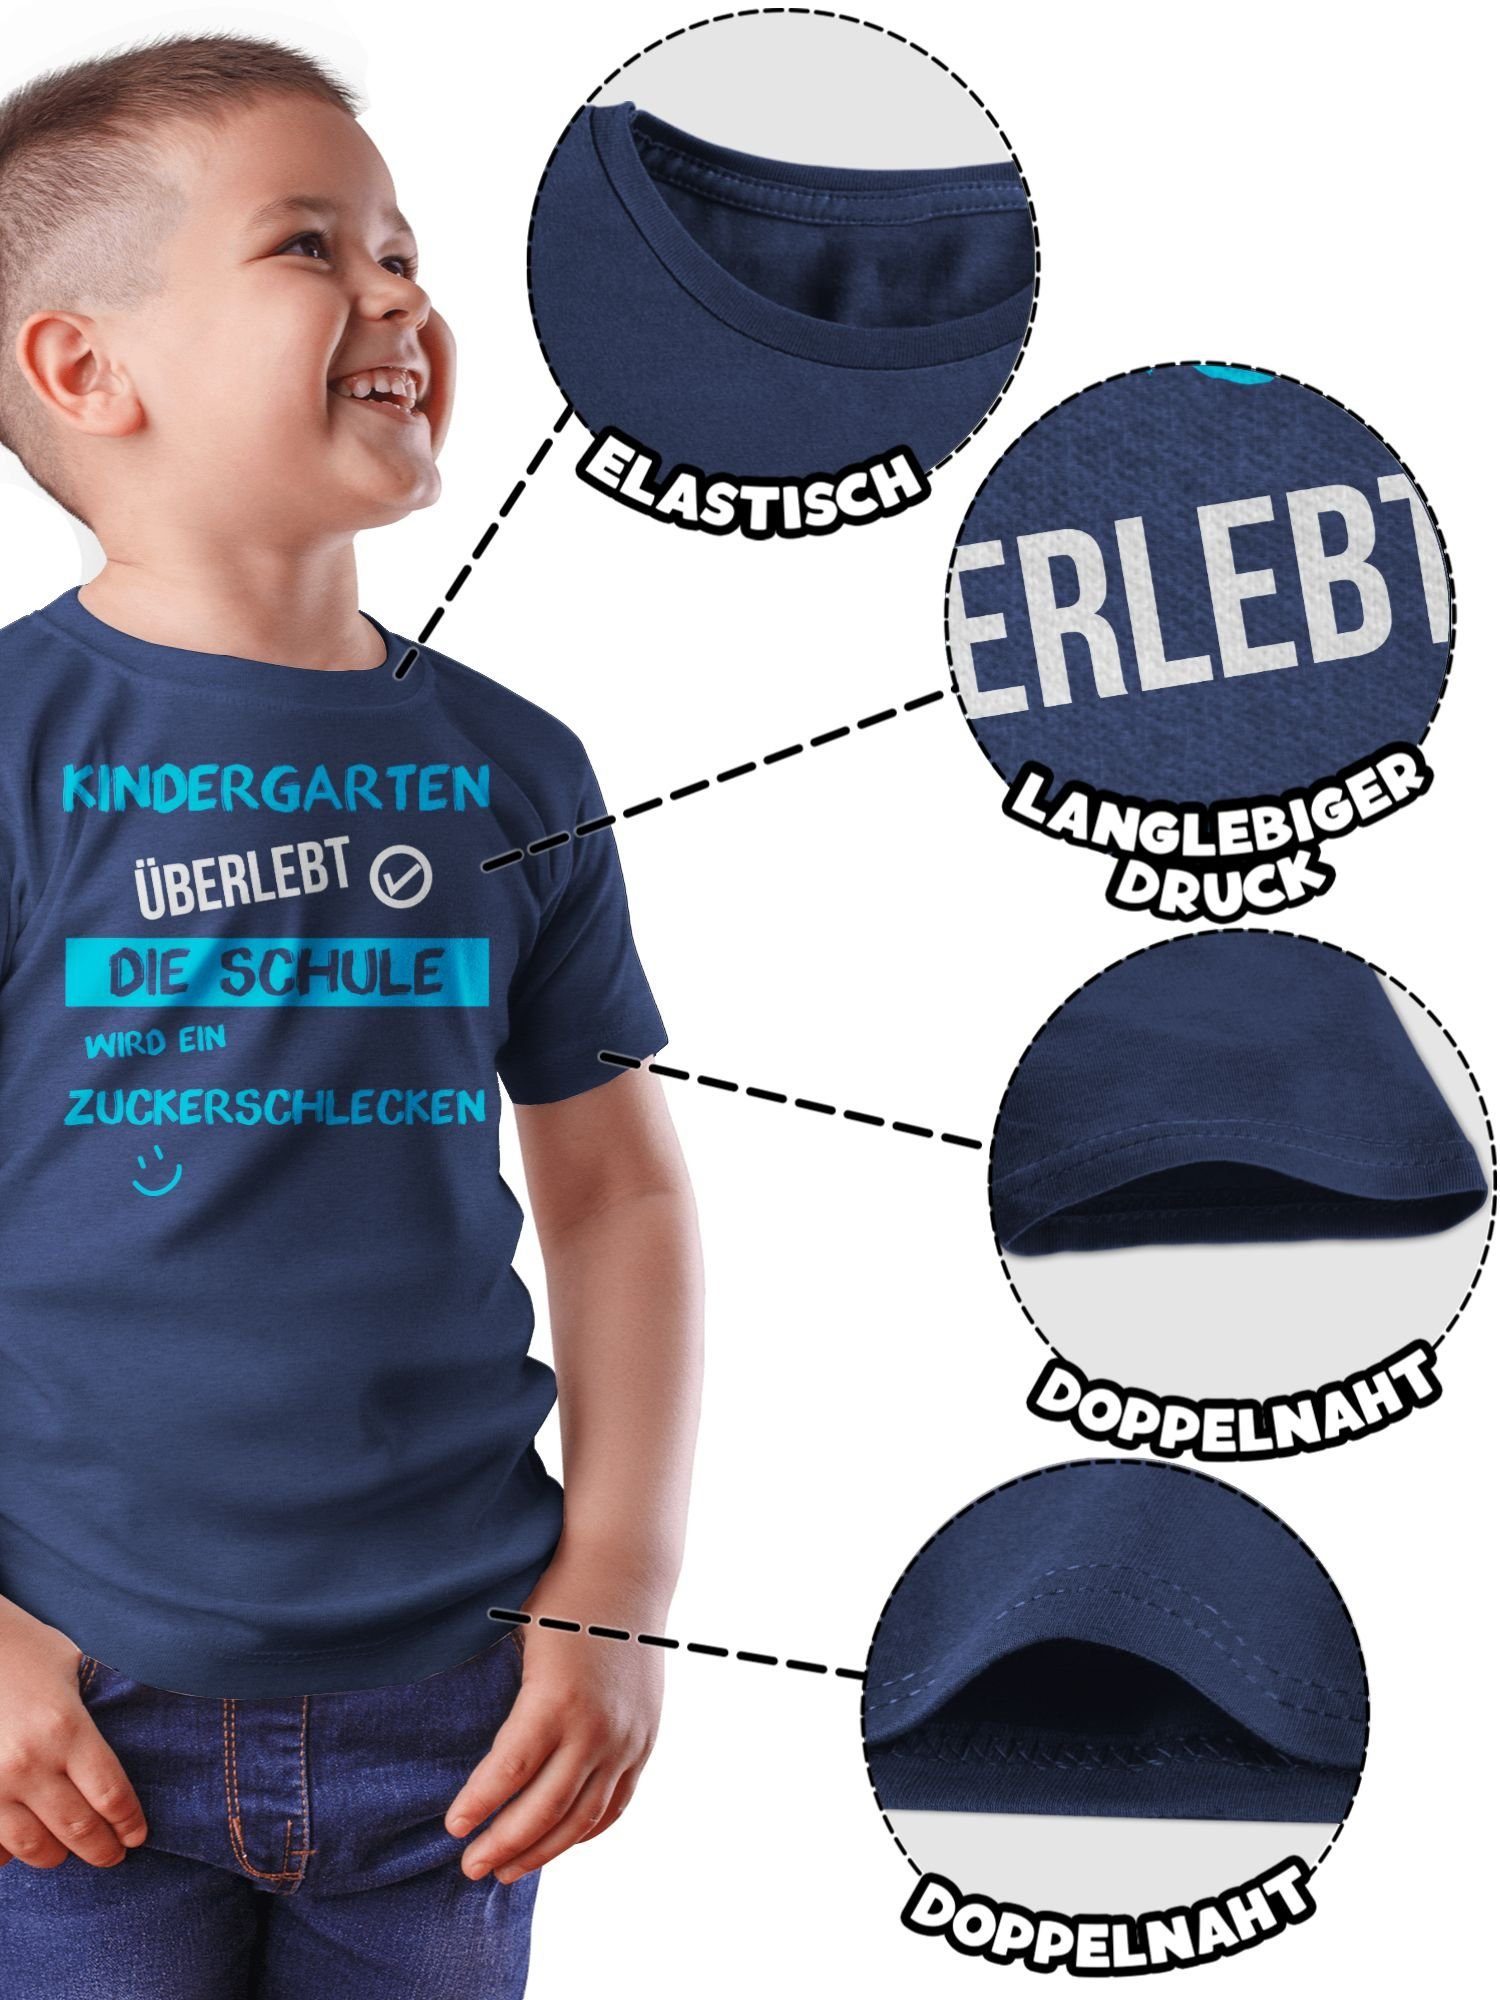 Shirtracer T-Shirt Kindergarten blau 2 Geschenke Meliert Junge Schulanfang Einschulung überlebt Emoticon Dunkelblau